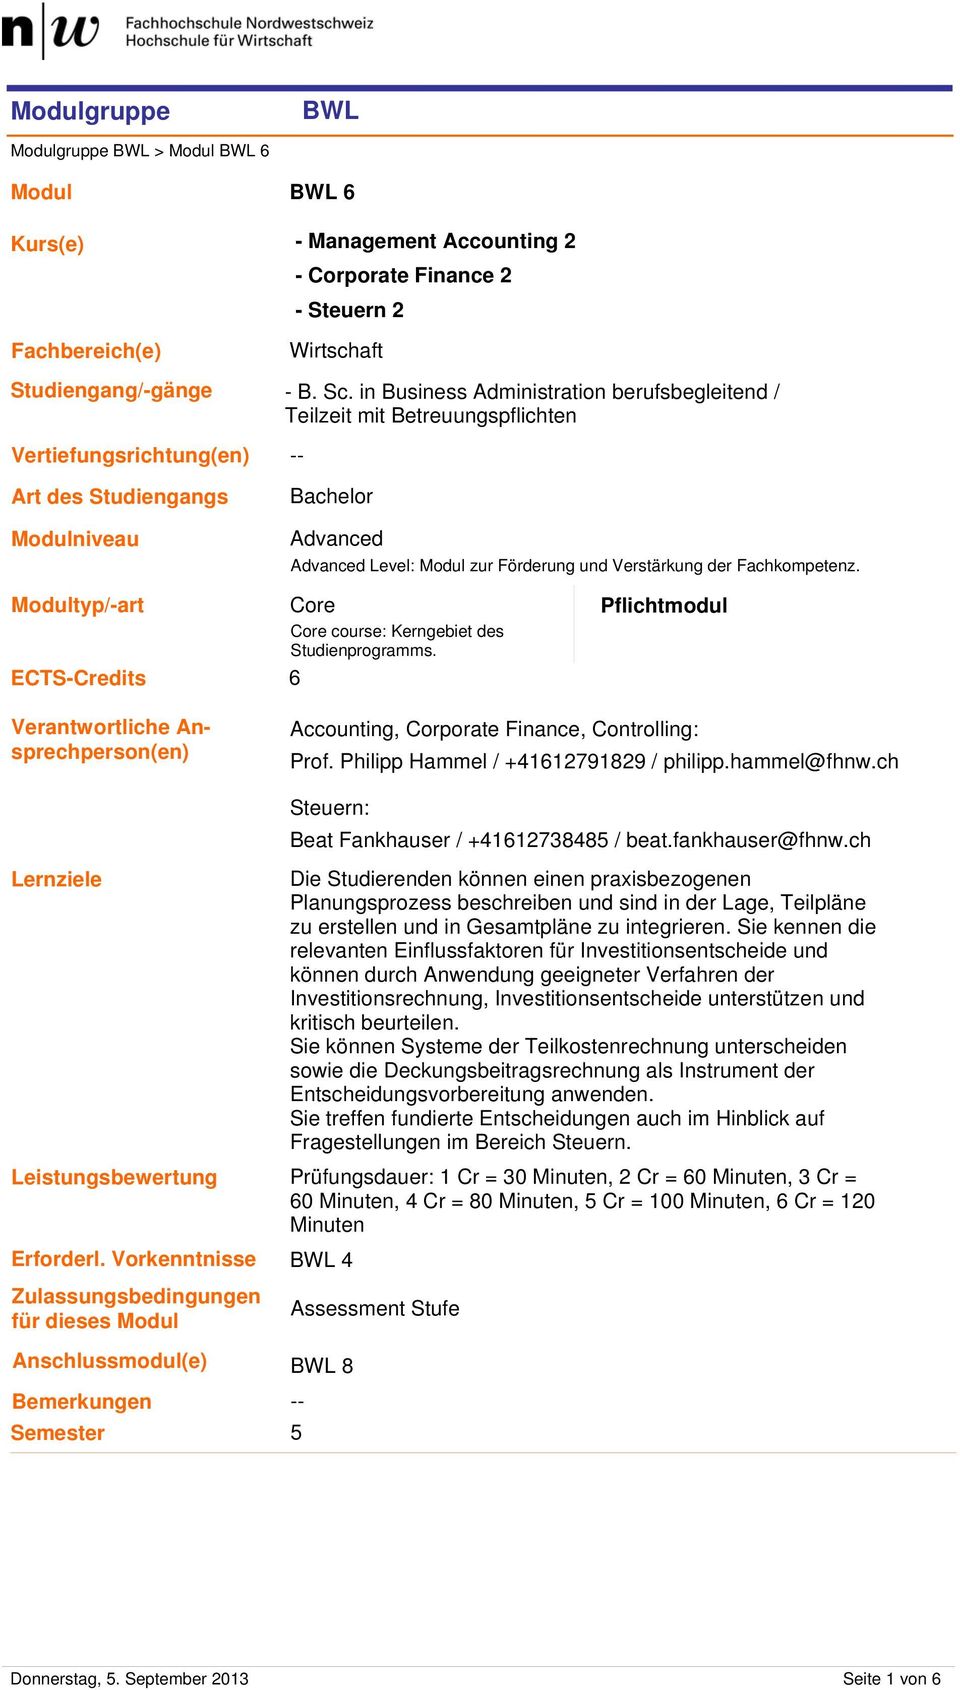 ECTS-Credits 6 Pflichtmodul Verantwortliche Ansprechperson(en) Accounting, Corporate Finance, Controlling: Prof. Philipp Hammel / +41612791829 / philipp.hammel@fhnw.